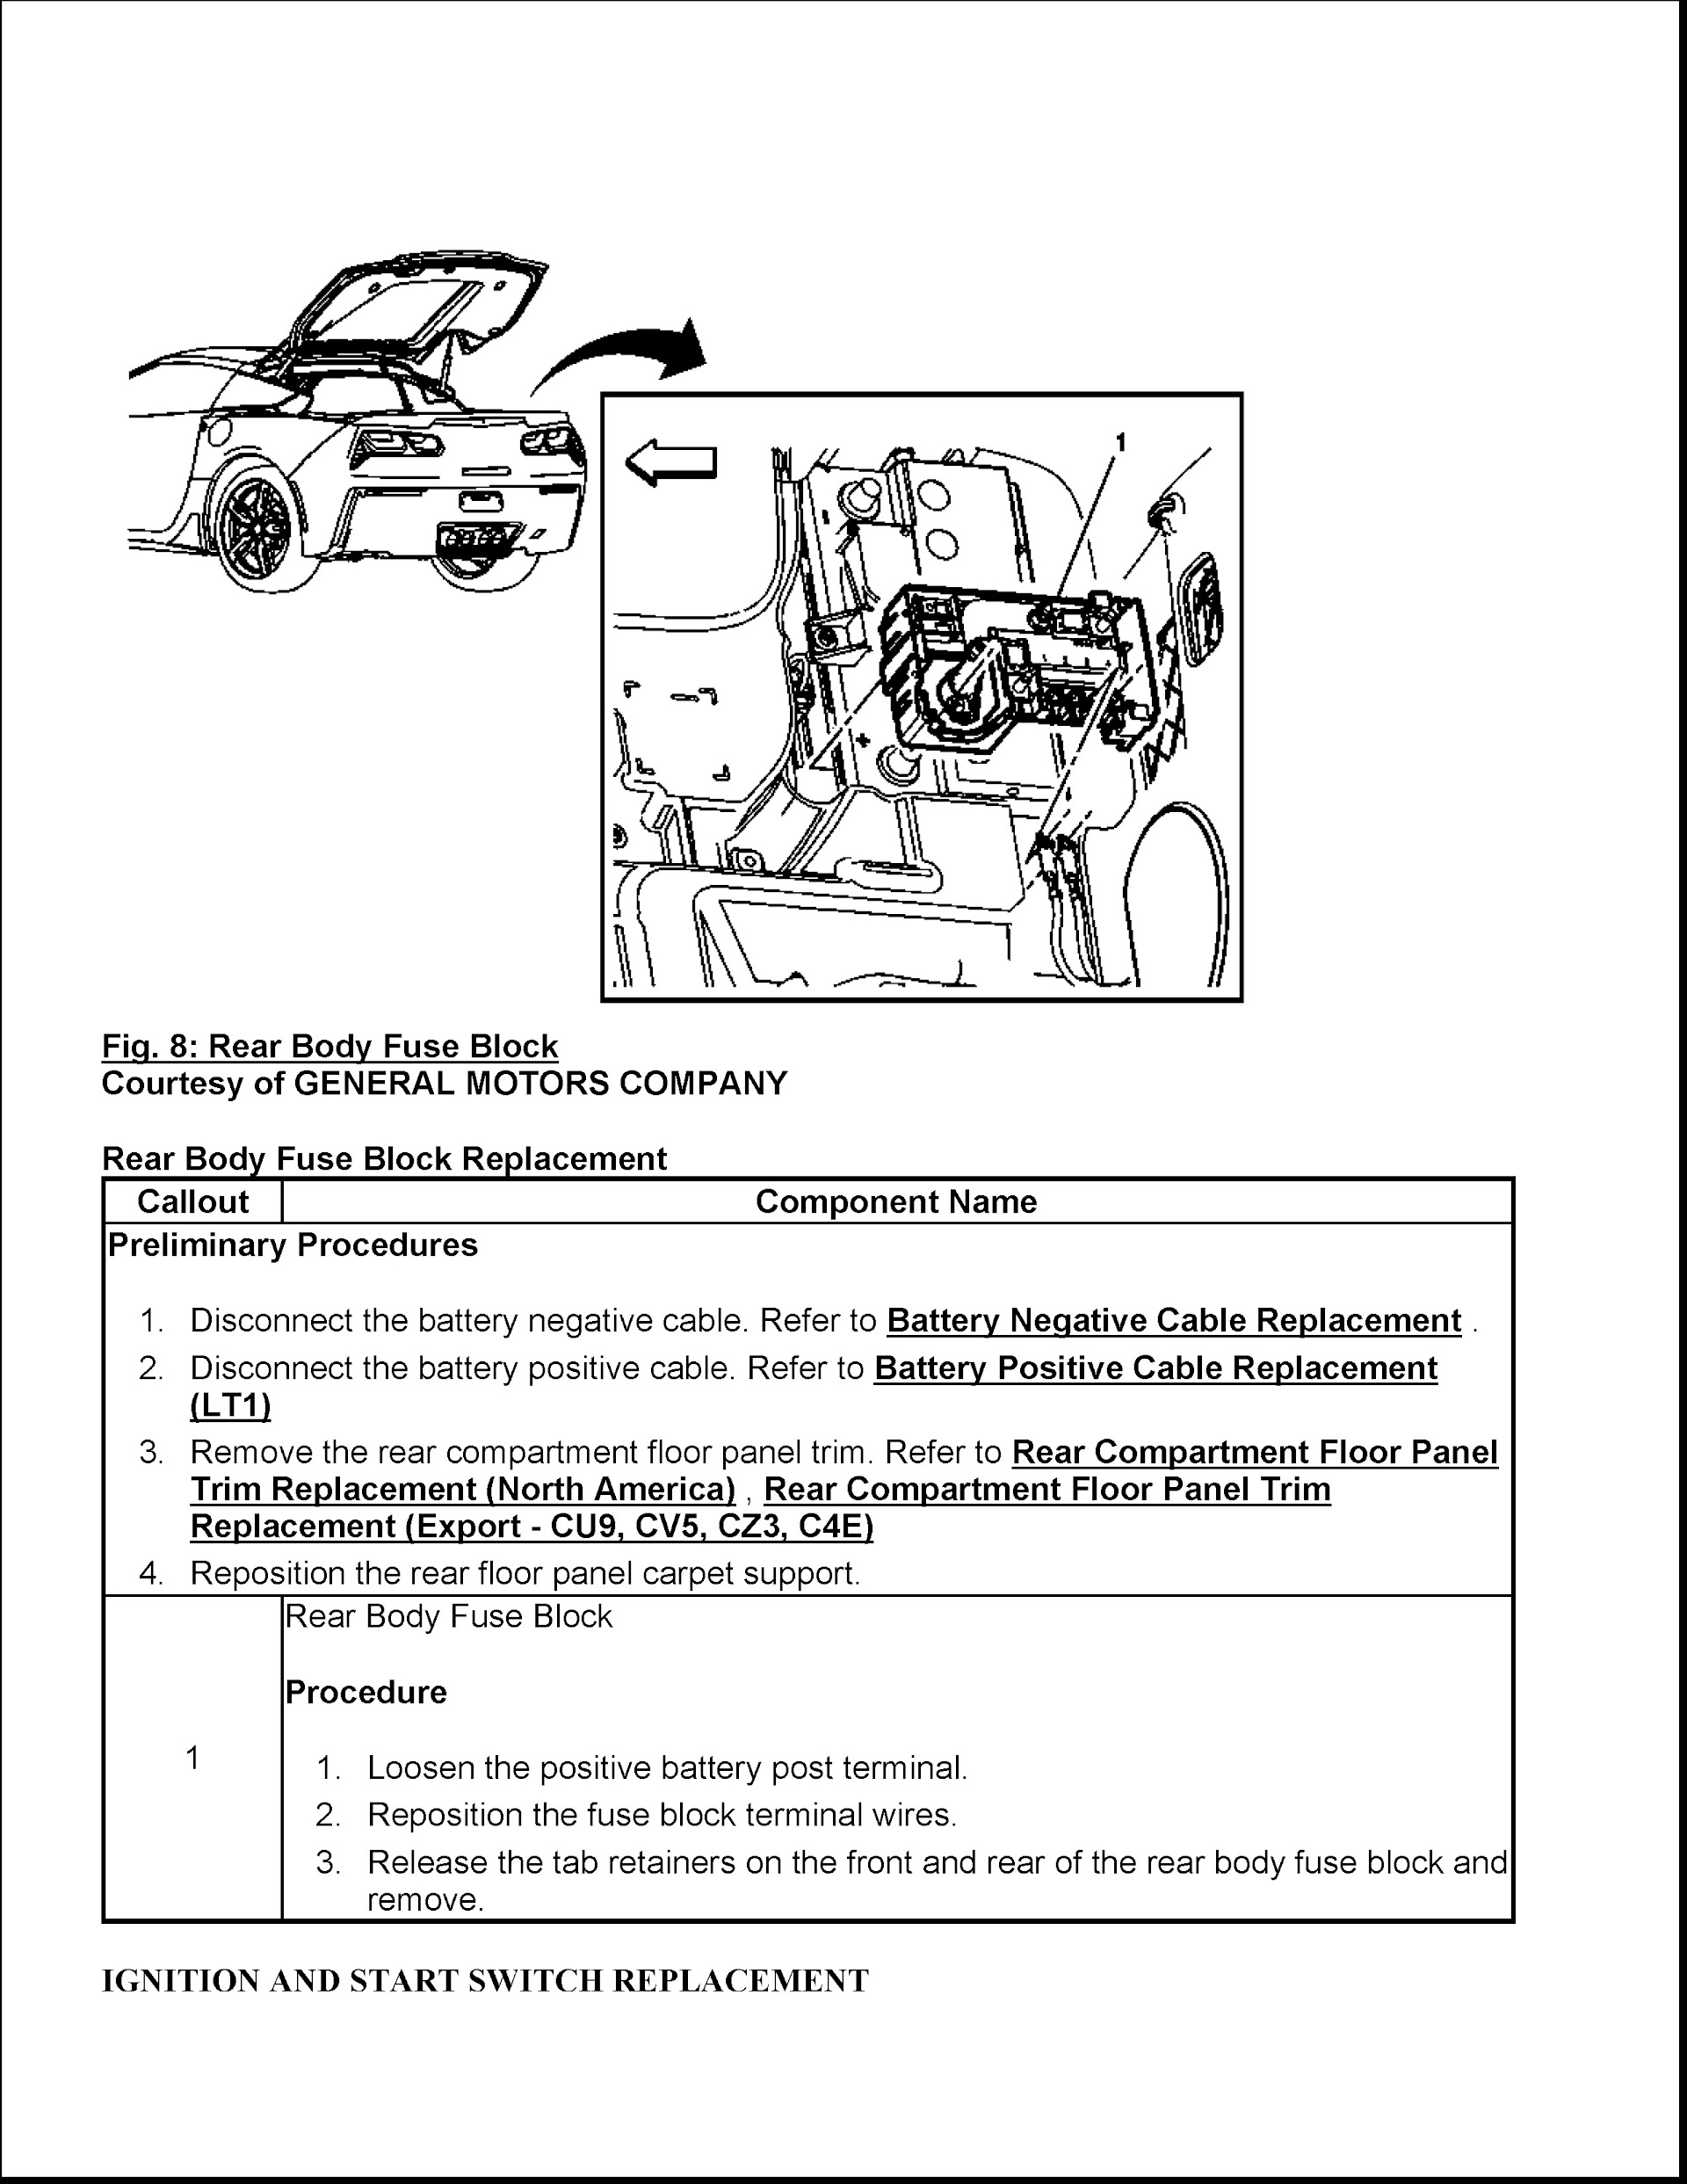 CONTENTS: 2014-2017 Chevrolet Corvette Repair Manual C7, Rear Body Fuse Block